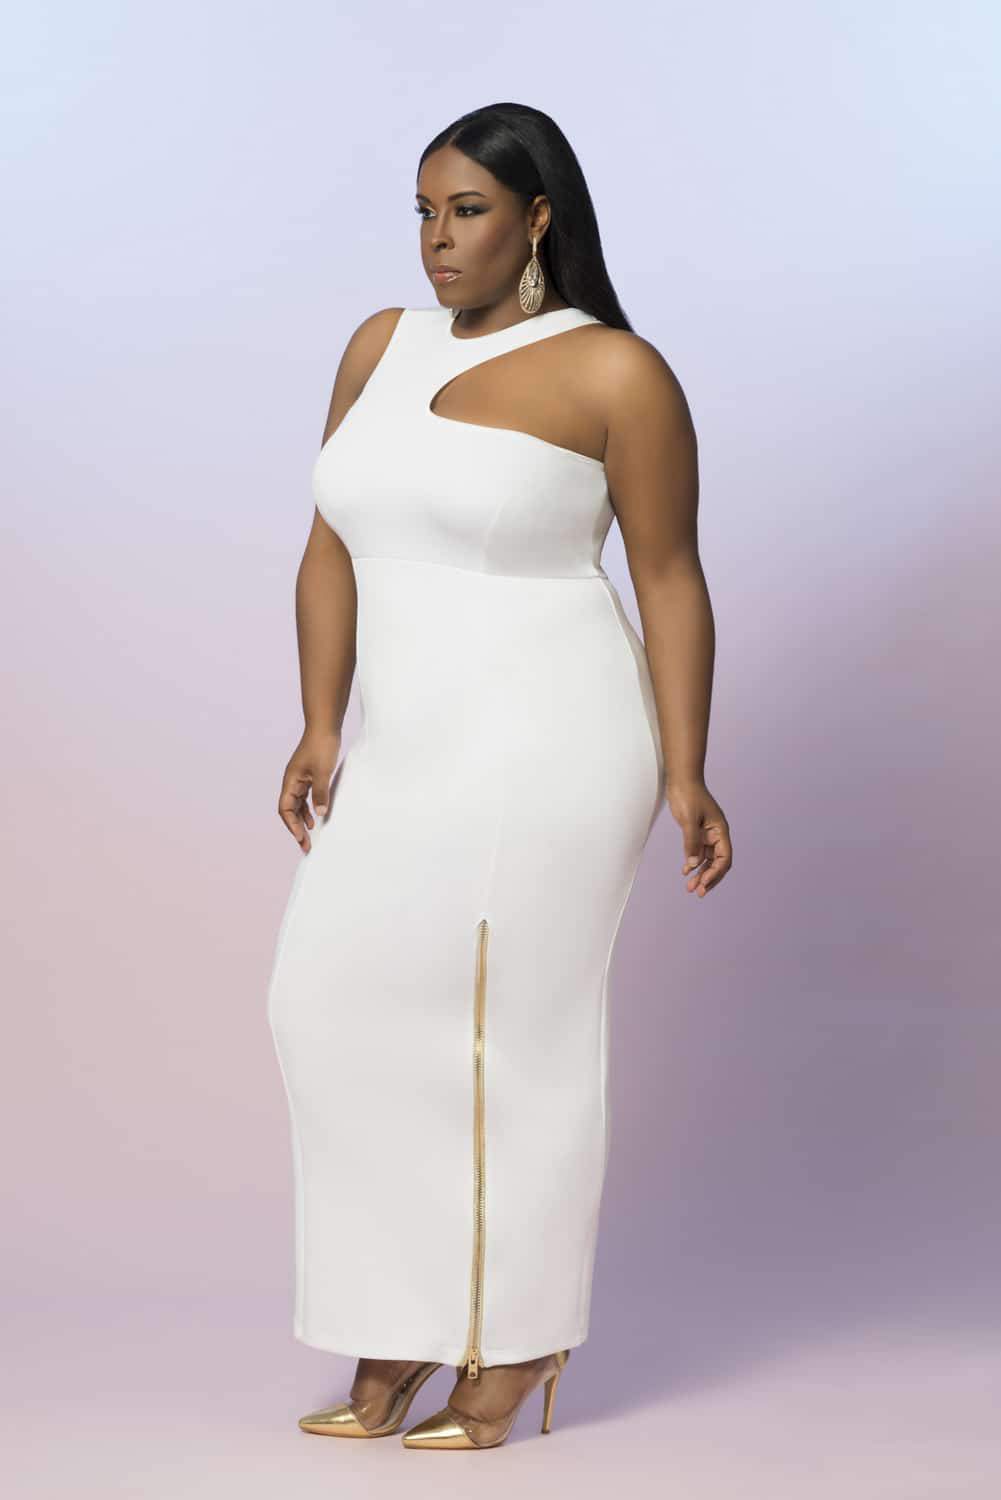 Z by Zevarra White Label Plus Size Designer Summer Collection on The Curvy Fashionista